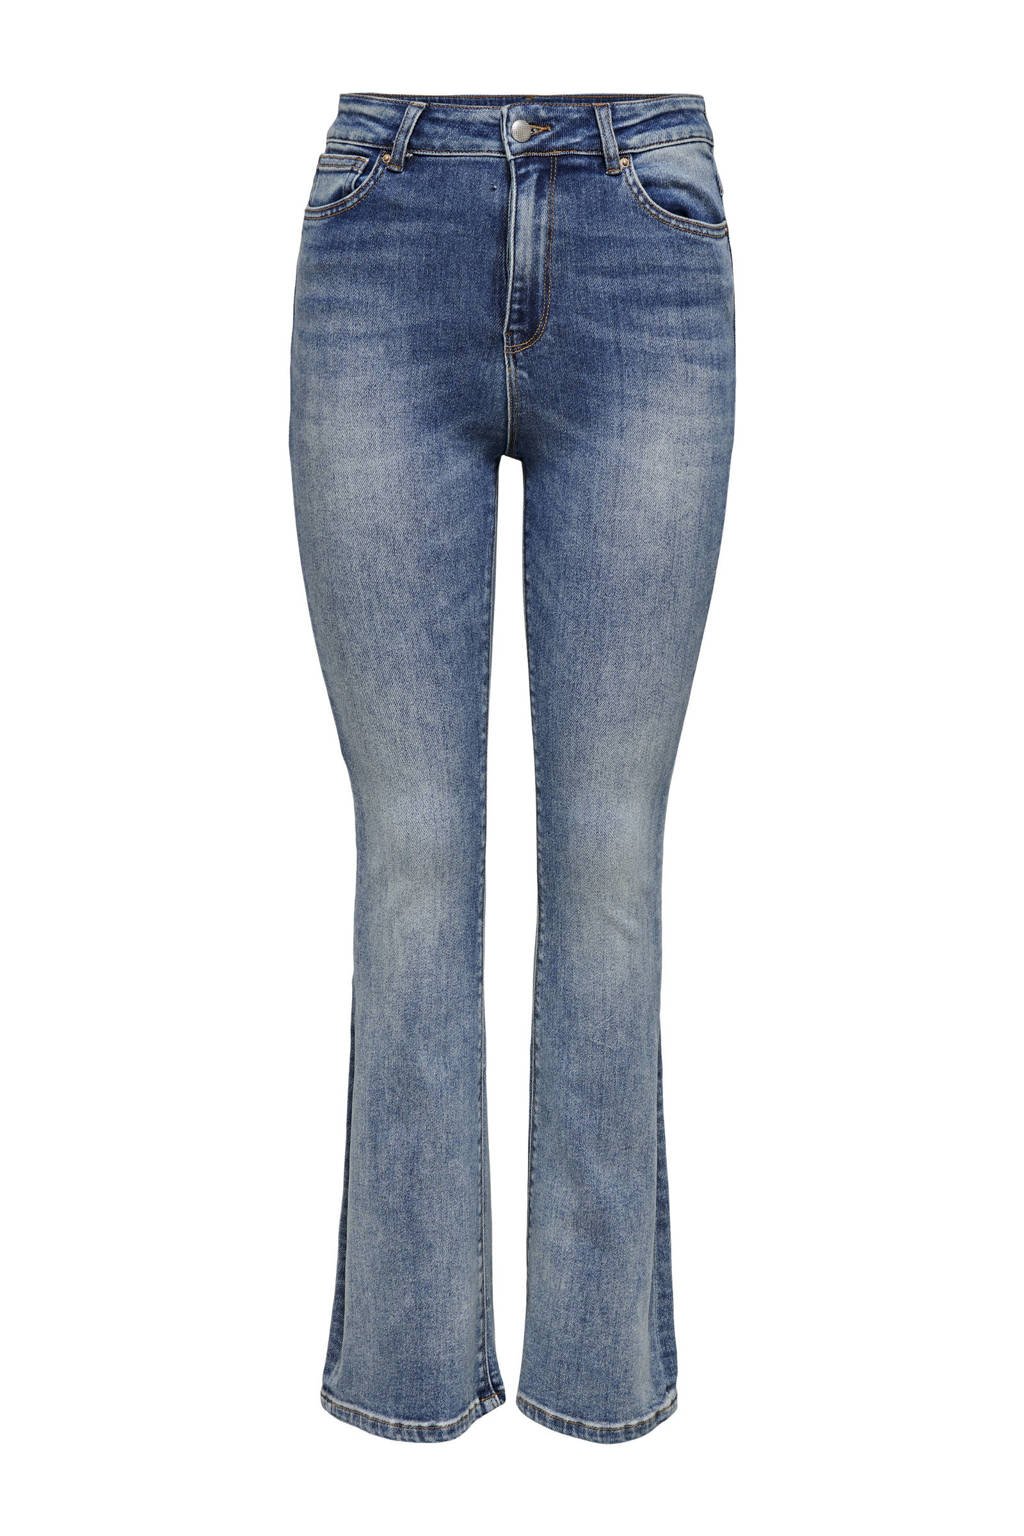 ONLY high waist flared jeans ONLMILA medium blue denim, Medium blue denim